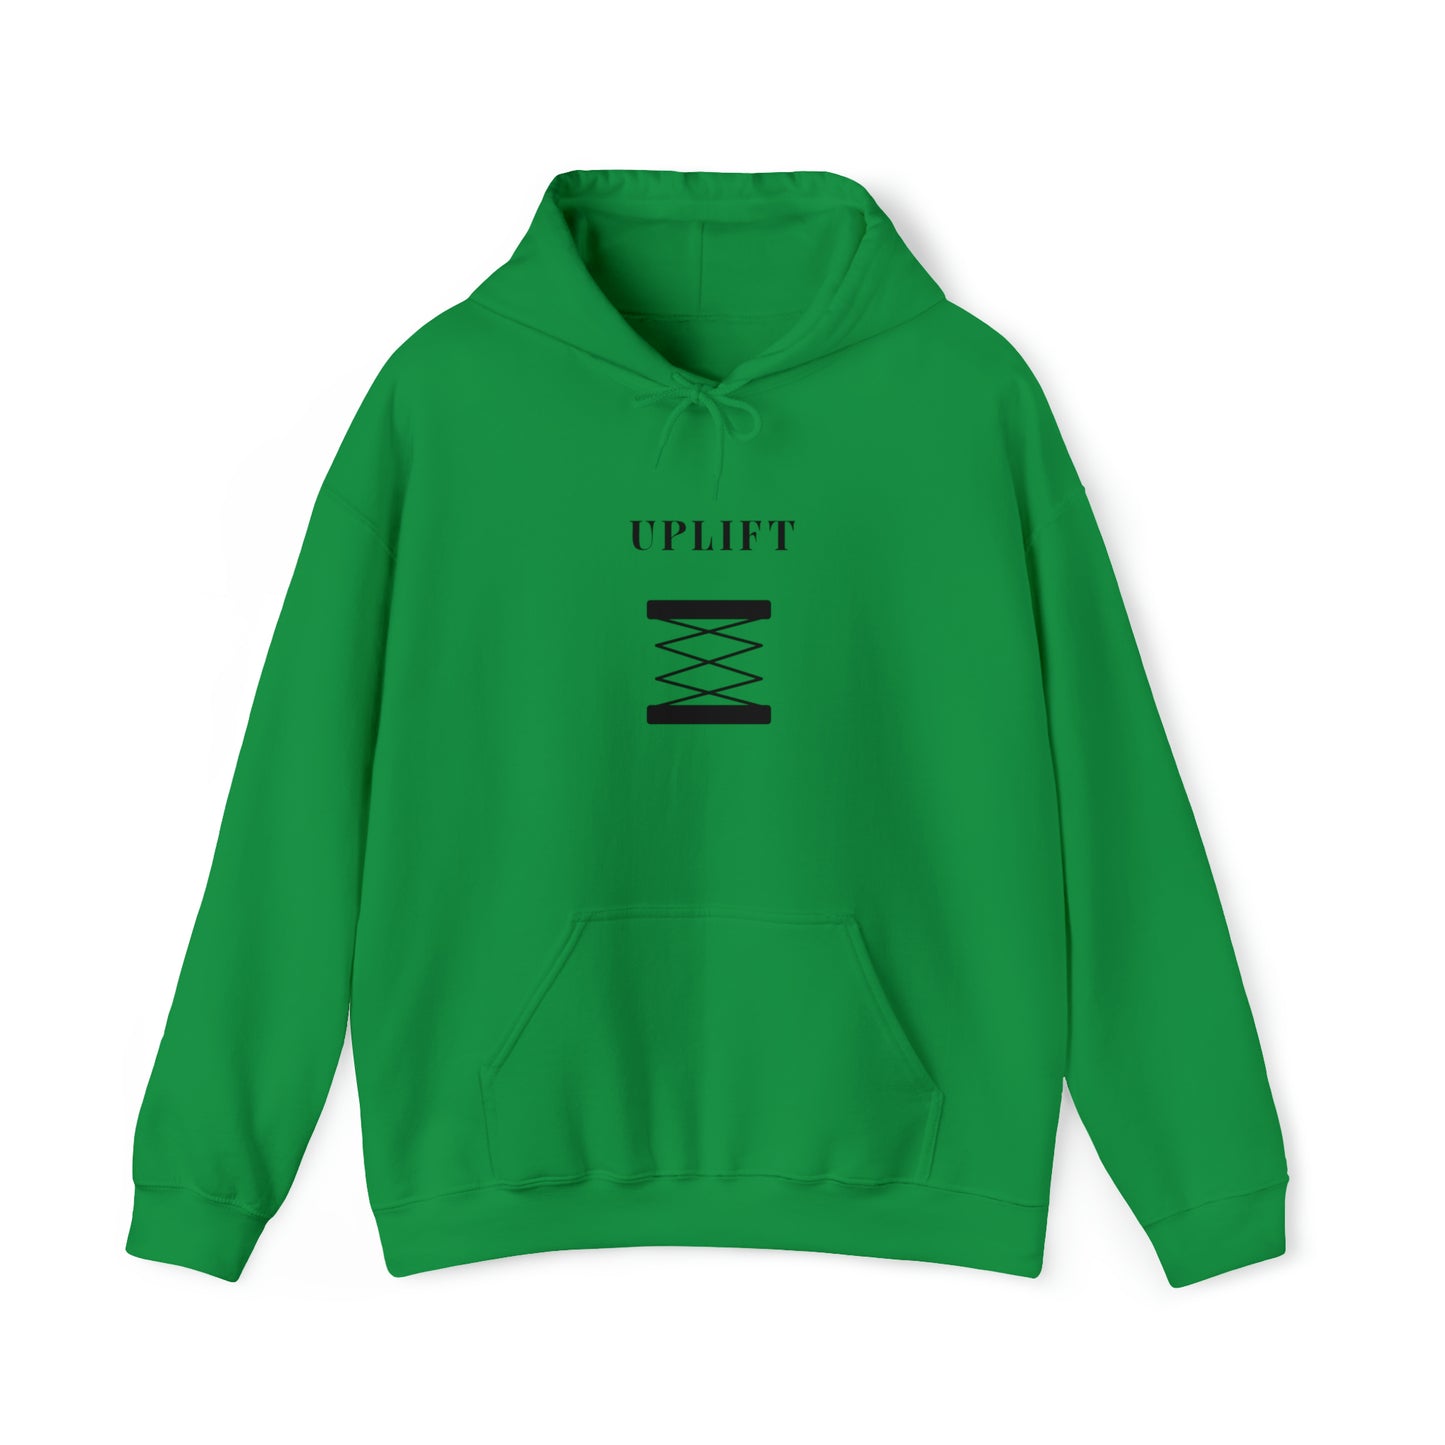 Uplift hooded sweatshirt gift, hoodie with inspirational words, sweatshirt word encourages, hoodie word uplift gift for friends and family